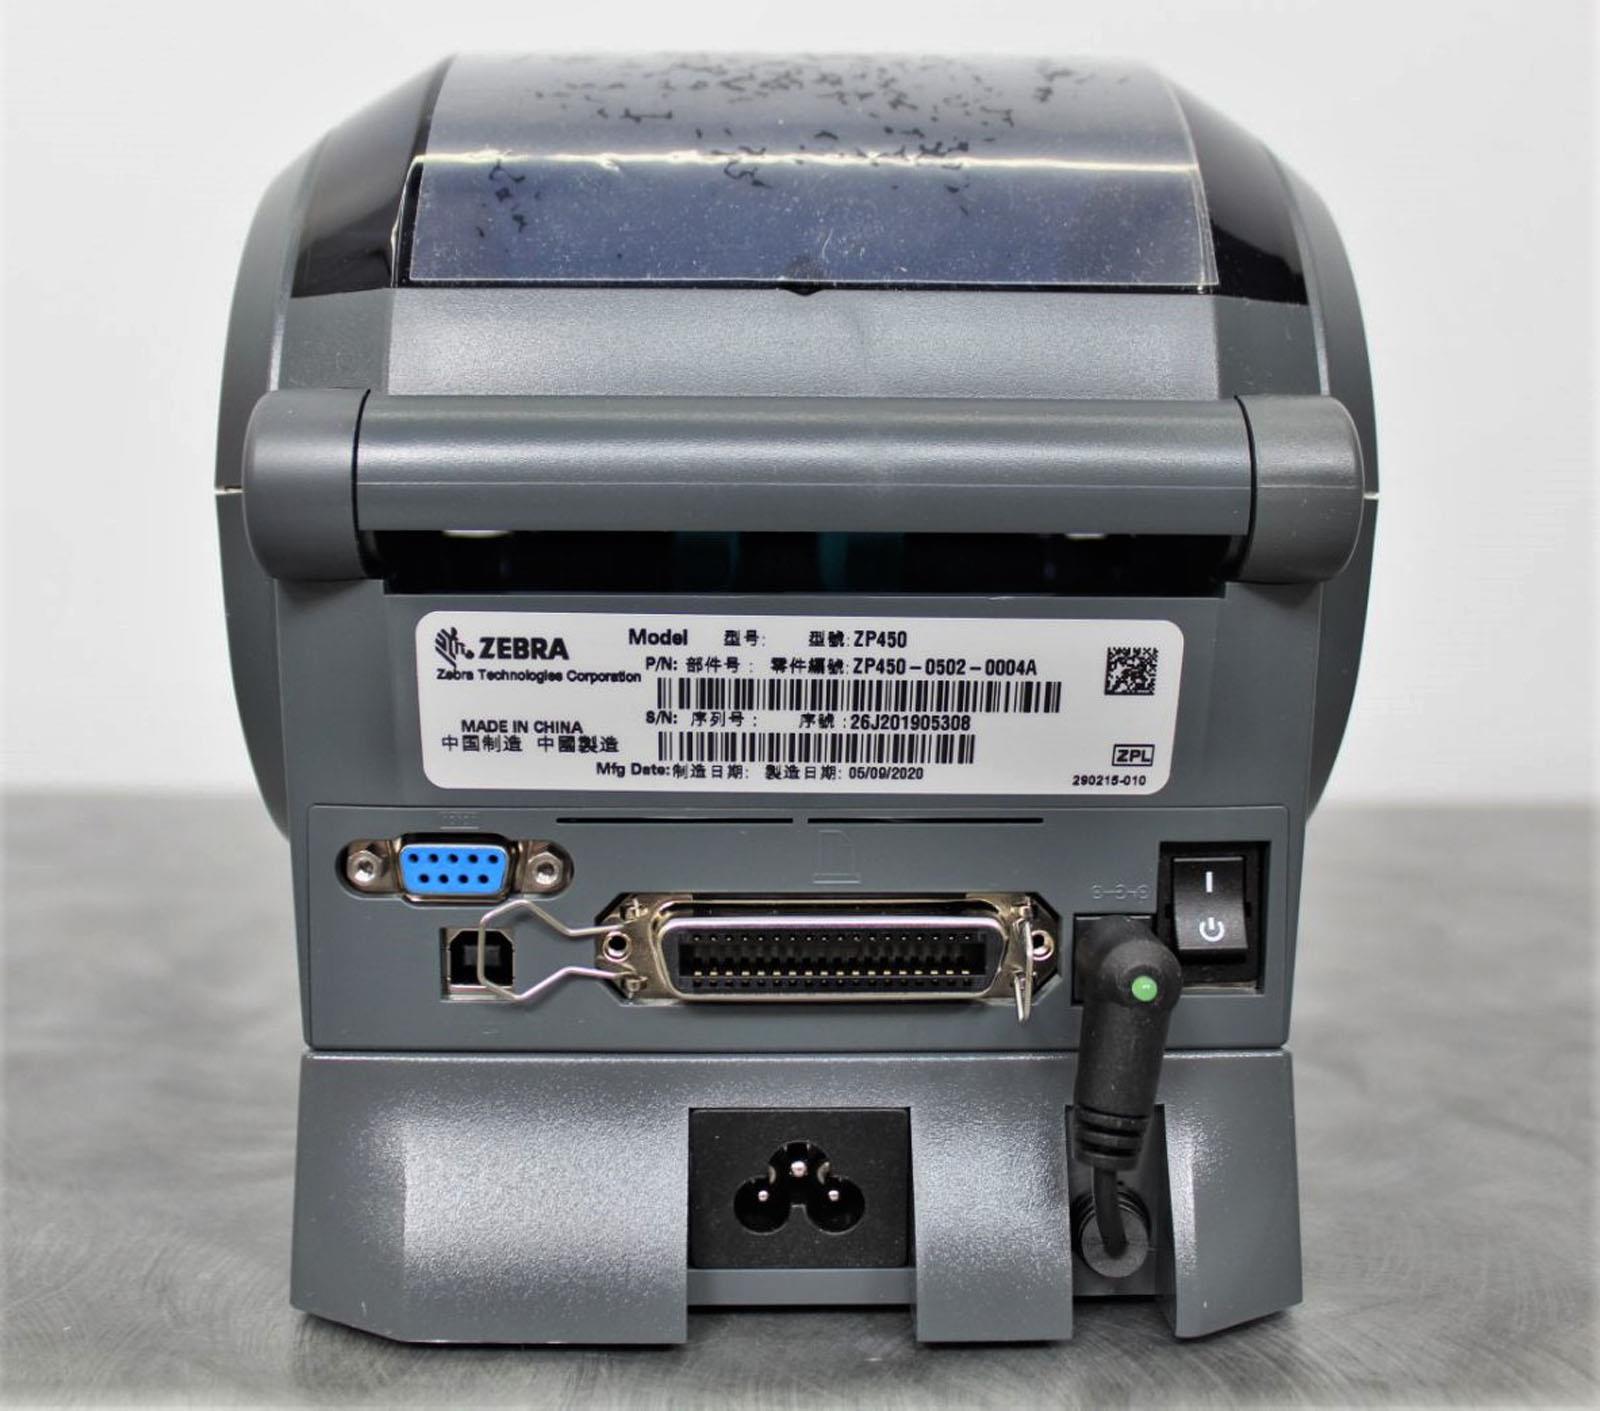 Zebra Zp450 Ctp Thermal Label Printer New In Box Zp450 0502 0004a With Warranty Ebay 0664